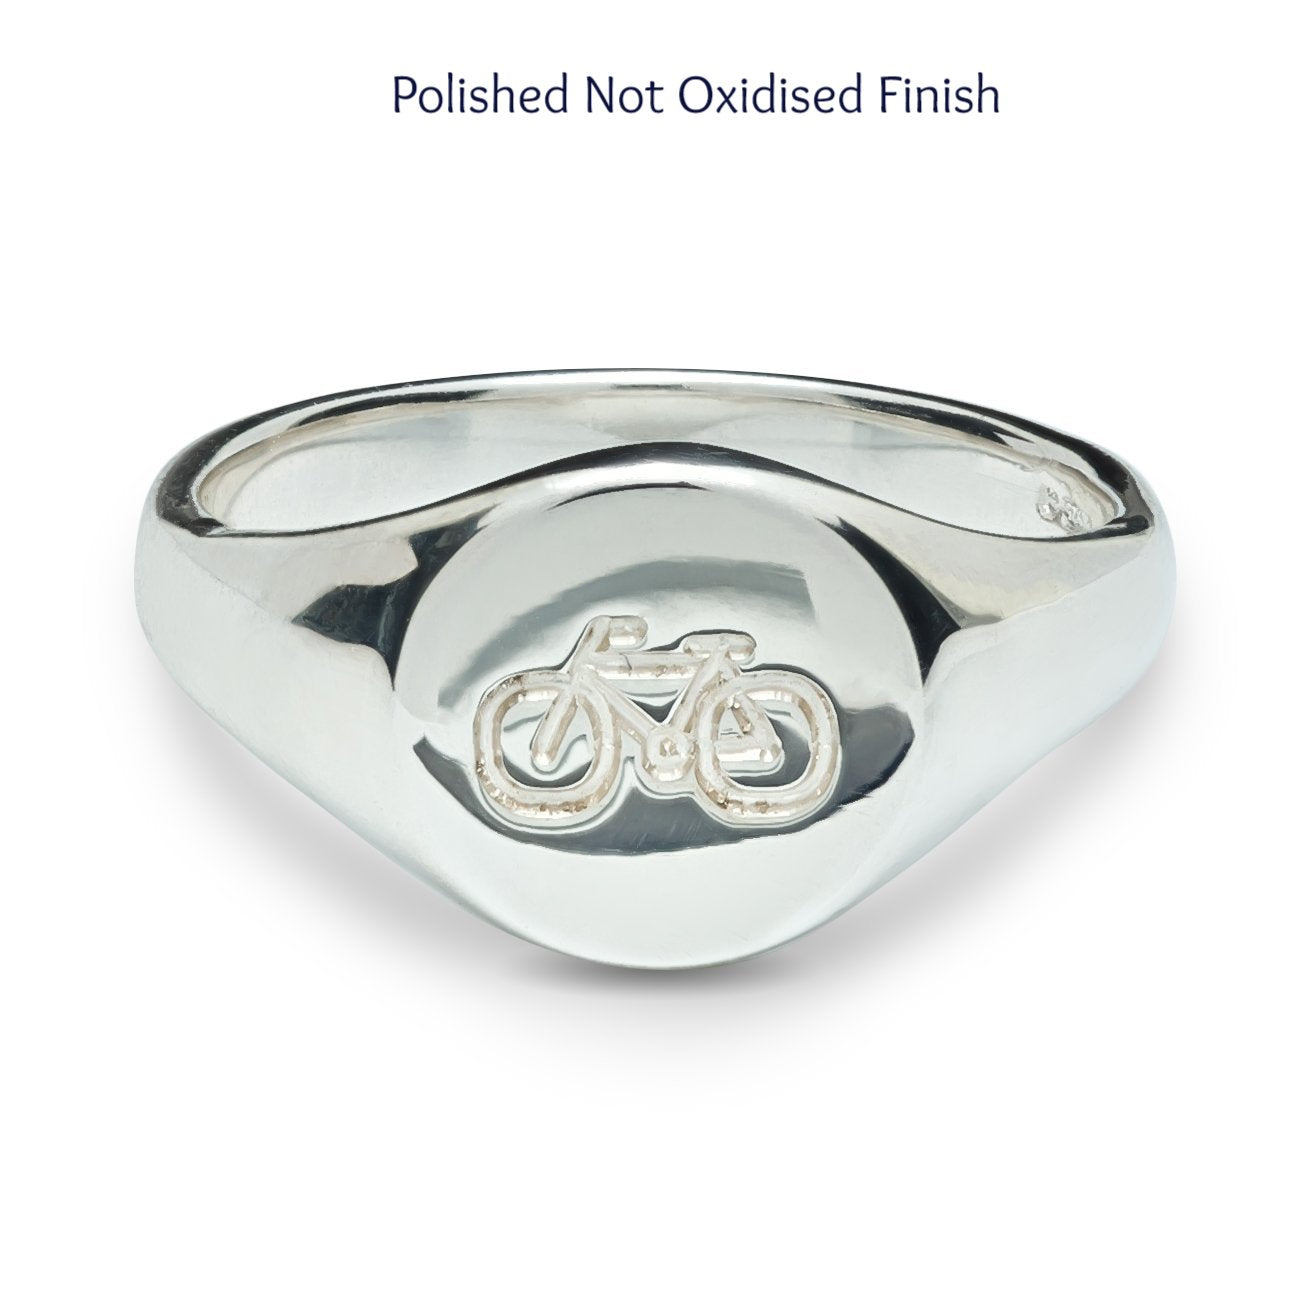 Polished silver mens signet ring engraved with bike symbol